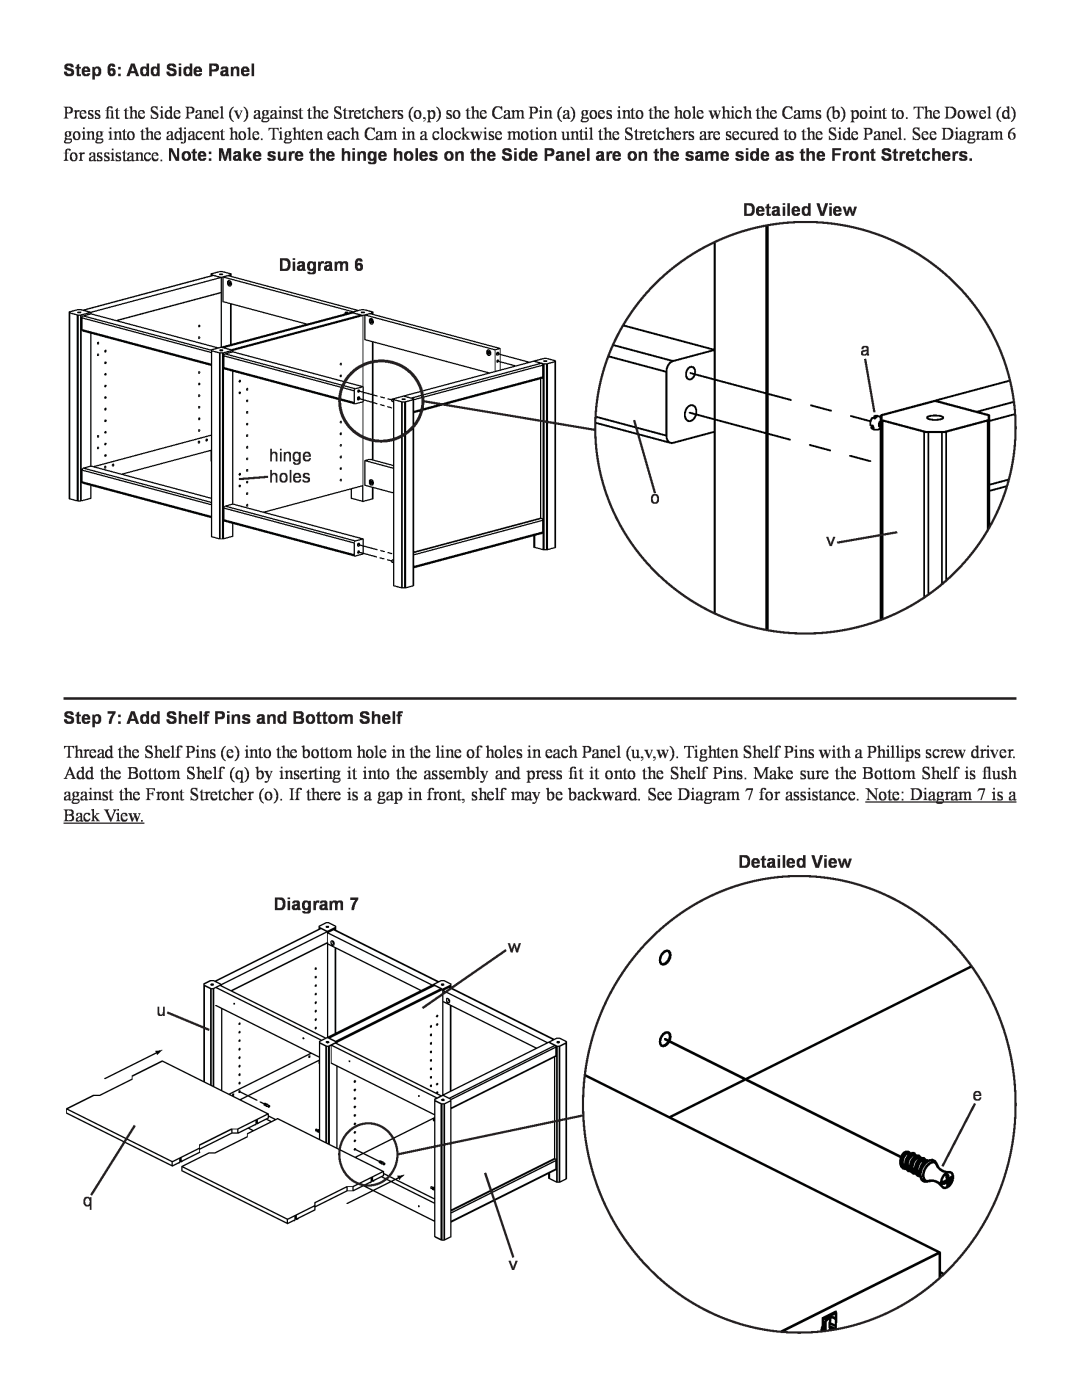 Sanus Systems WFV44 manual Add Side Panel, Add Shelf Pins and Bottom Shelf, Detailed View Diagram 